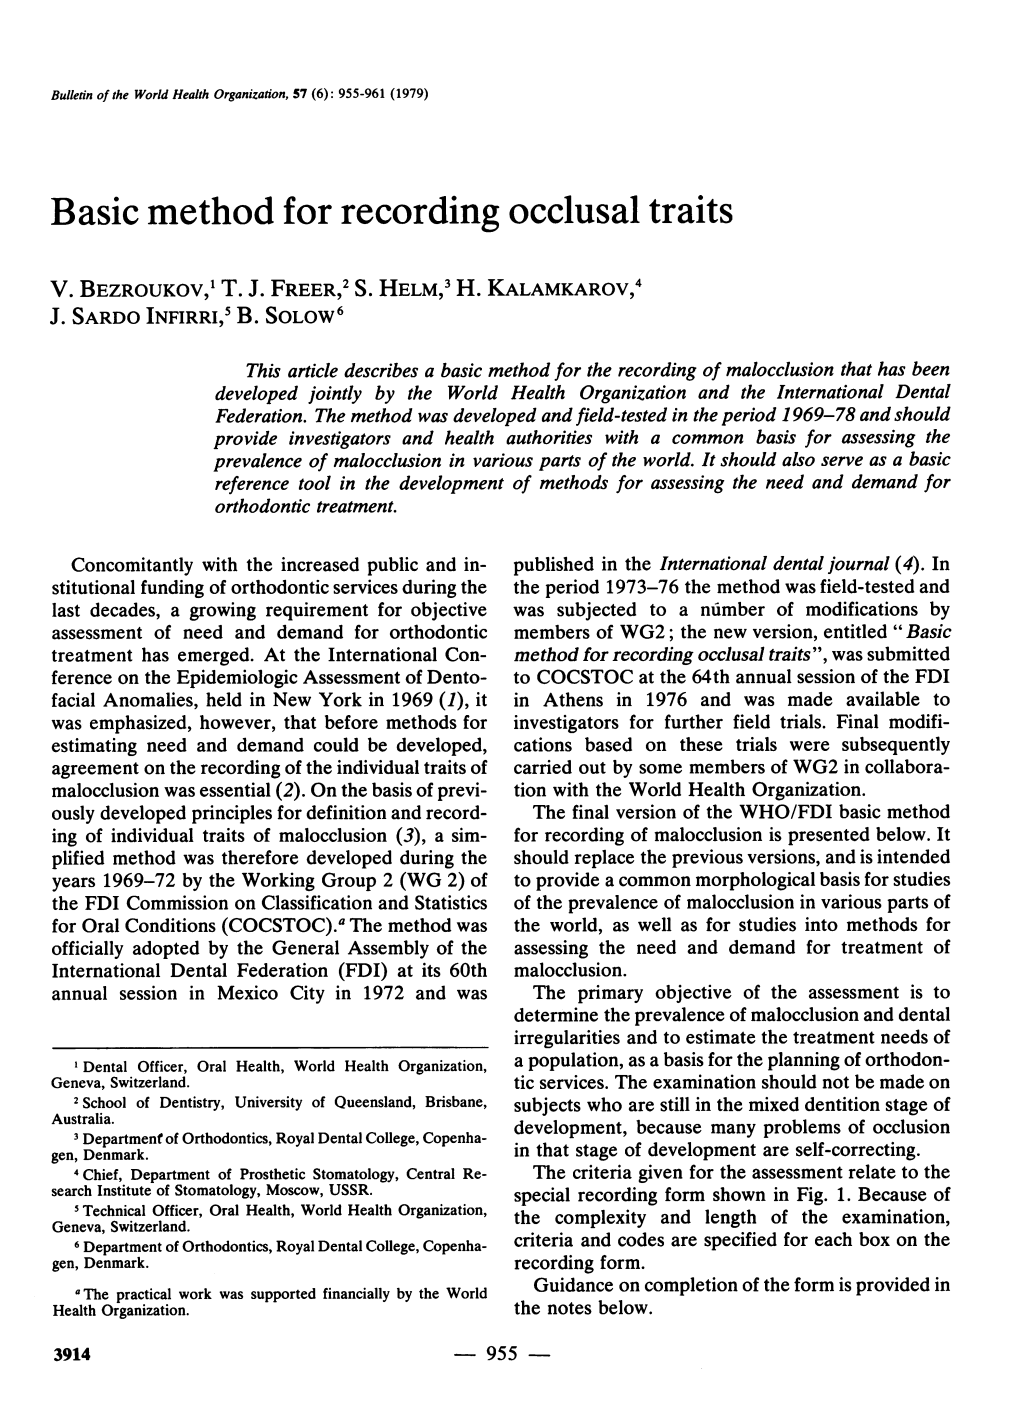 Basic Method for Recording Occlusal Traits